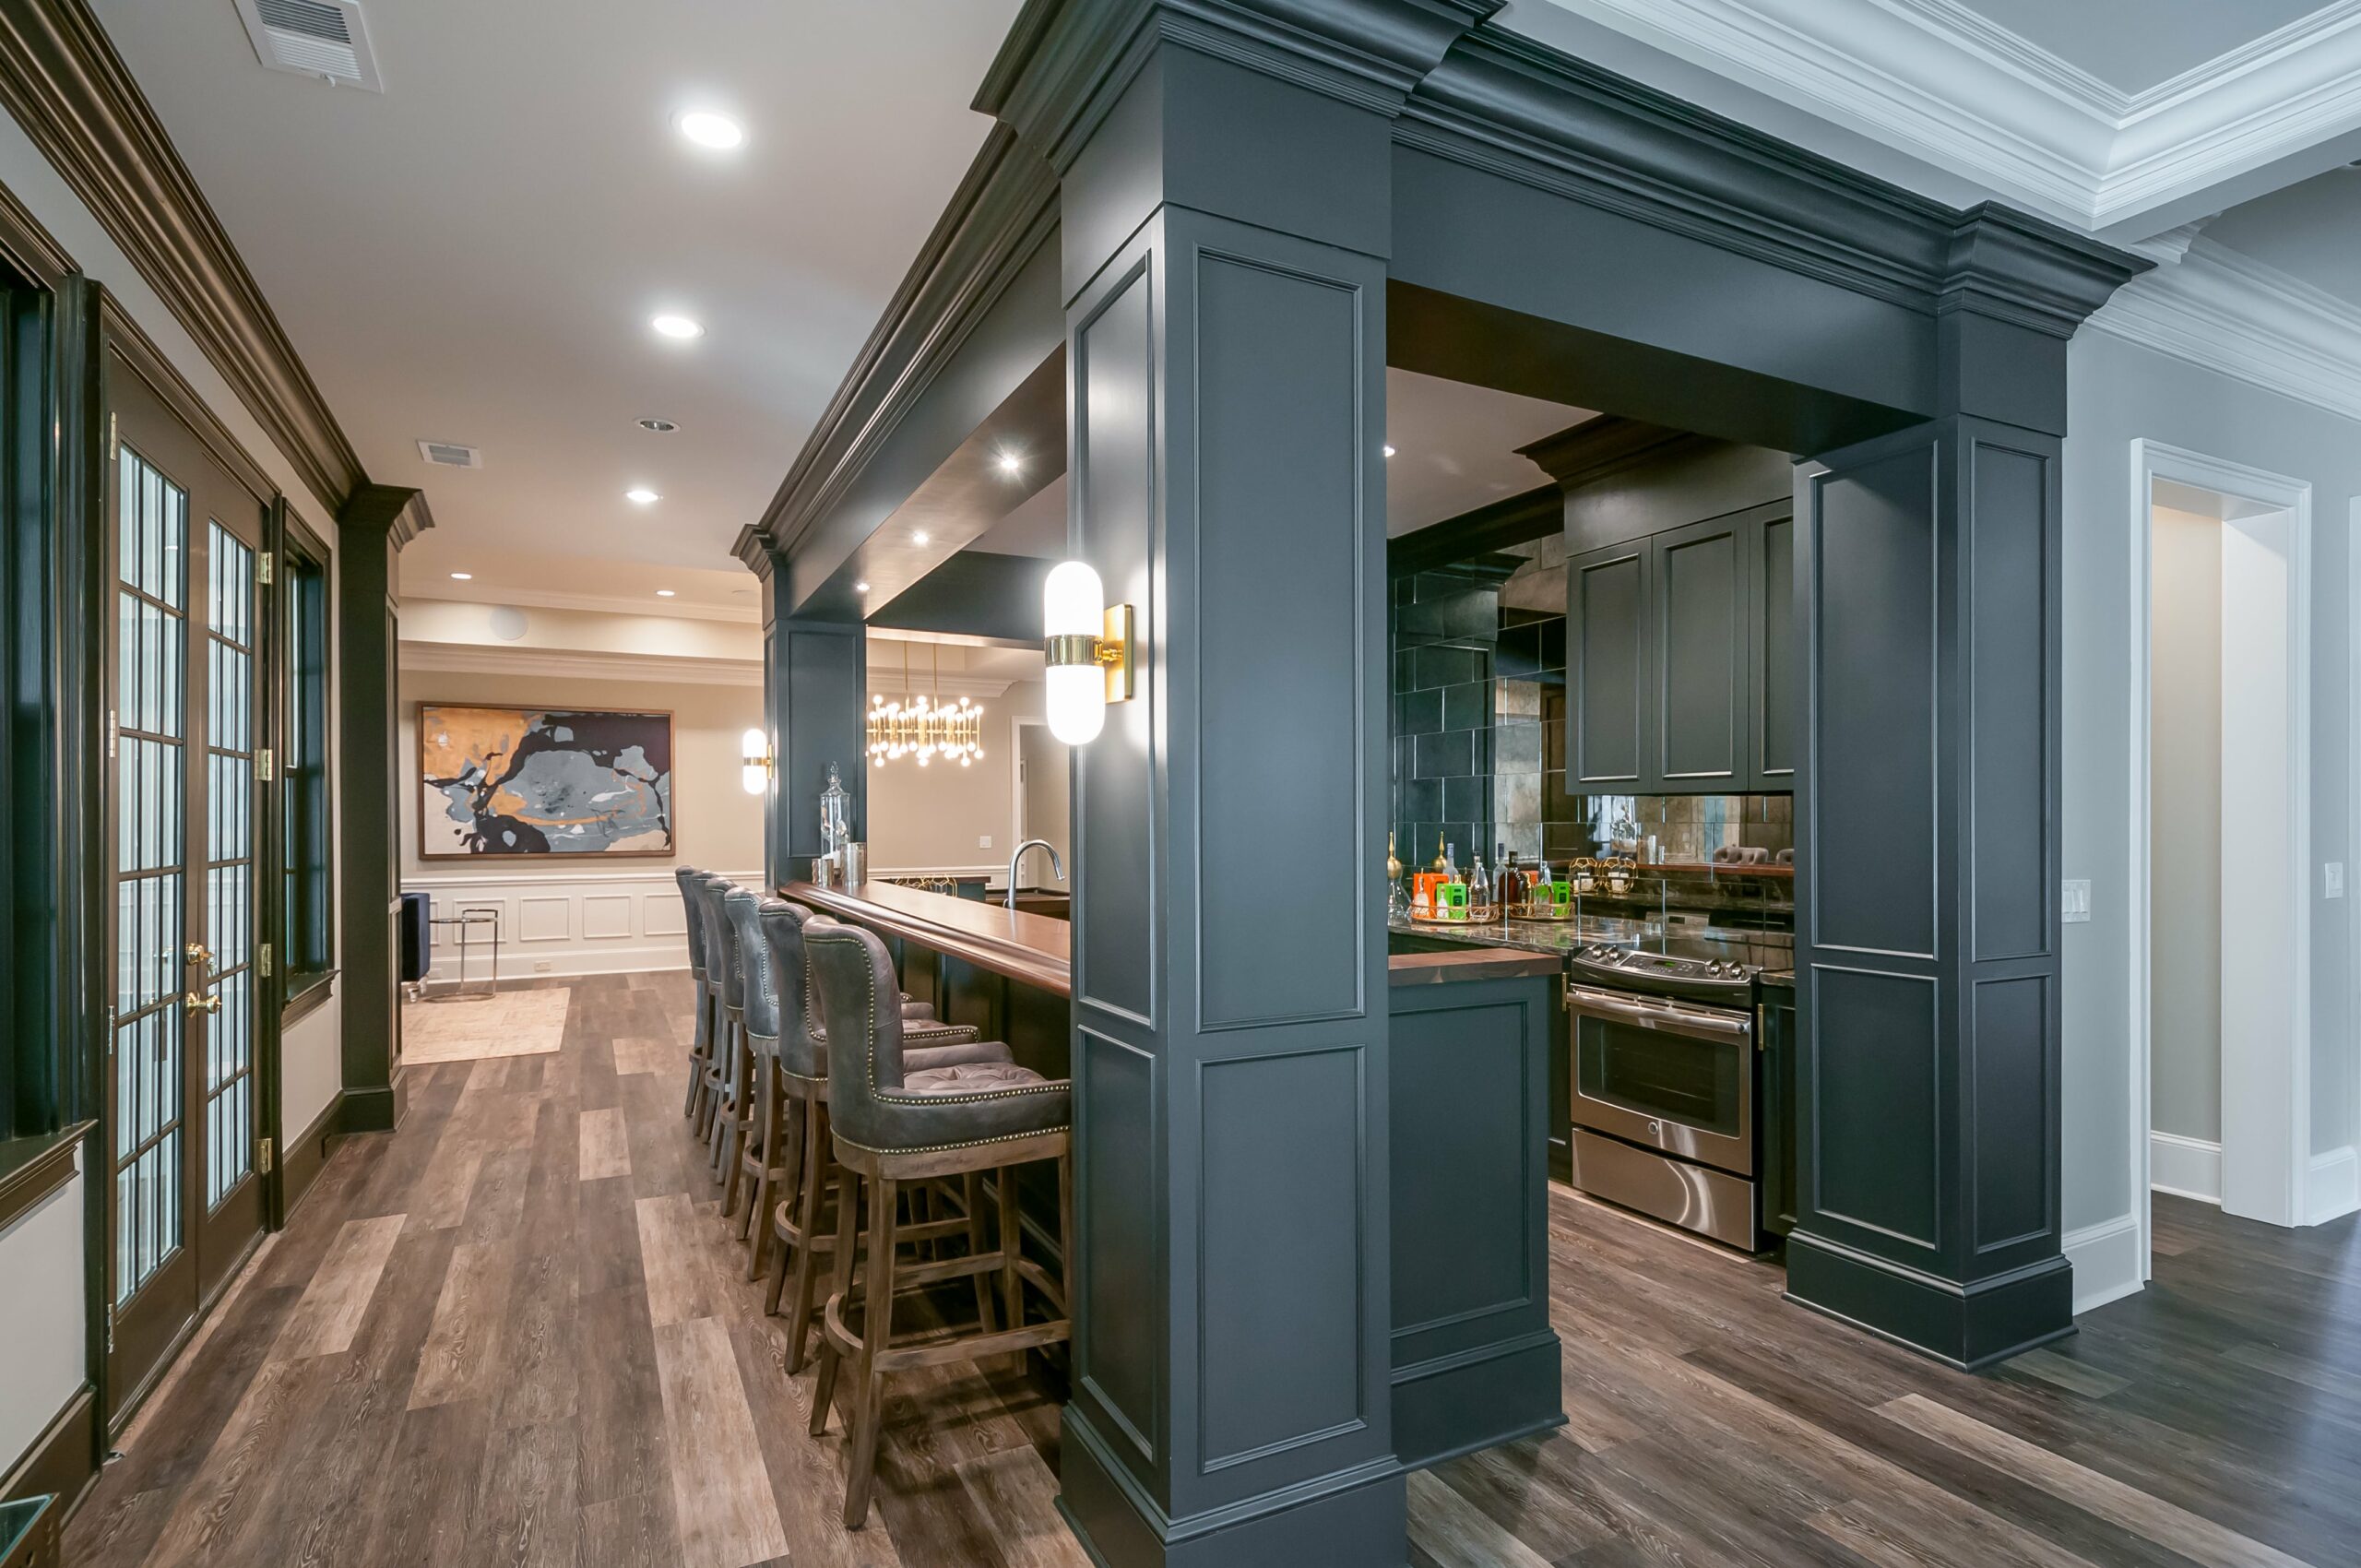 Dark basement kitchen and bar design in Alpharetta home remodel